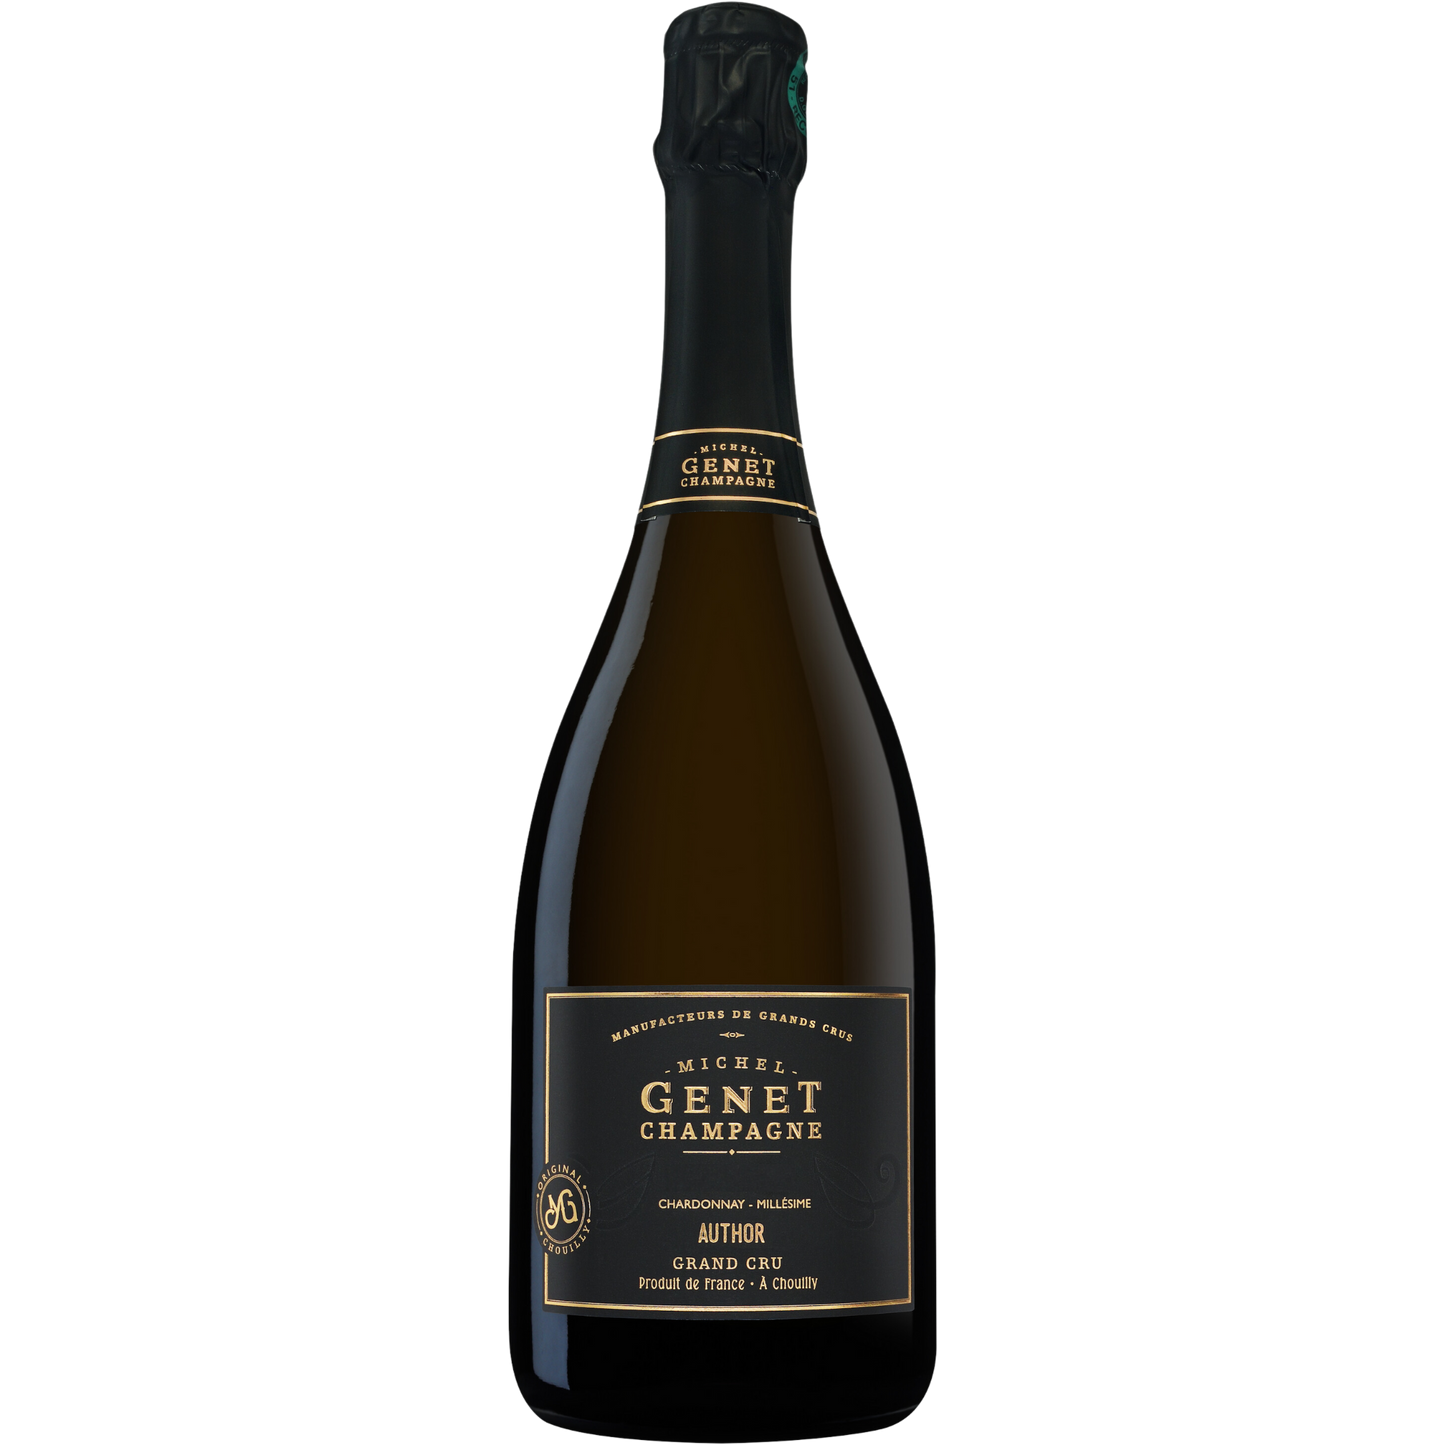 Michel Genet 'Author' Grand Cru Champagne 2014